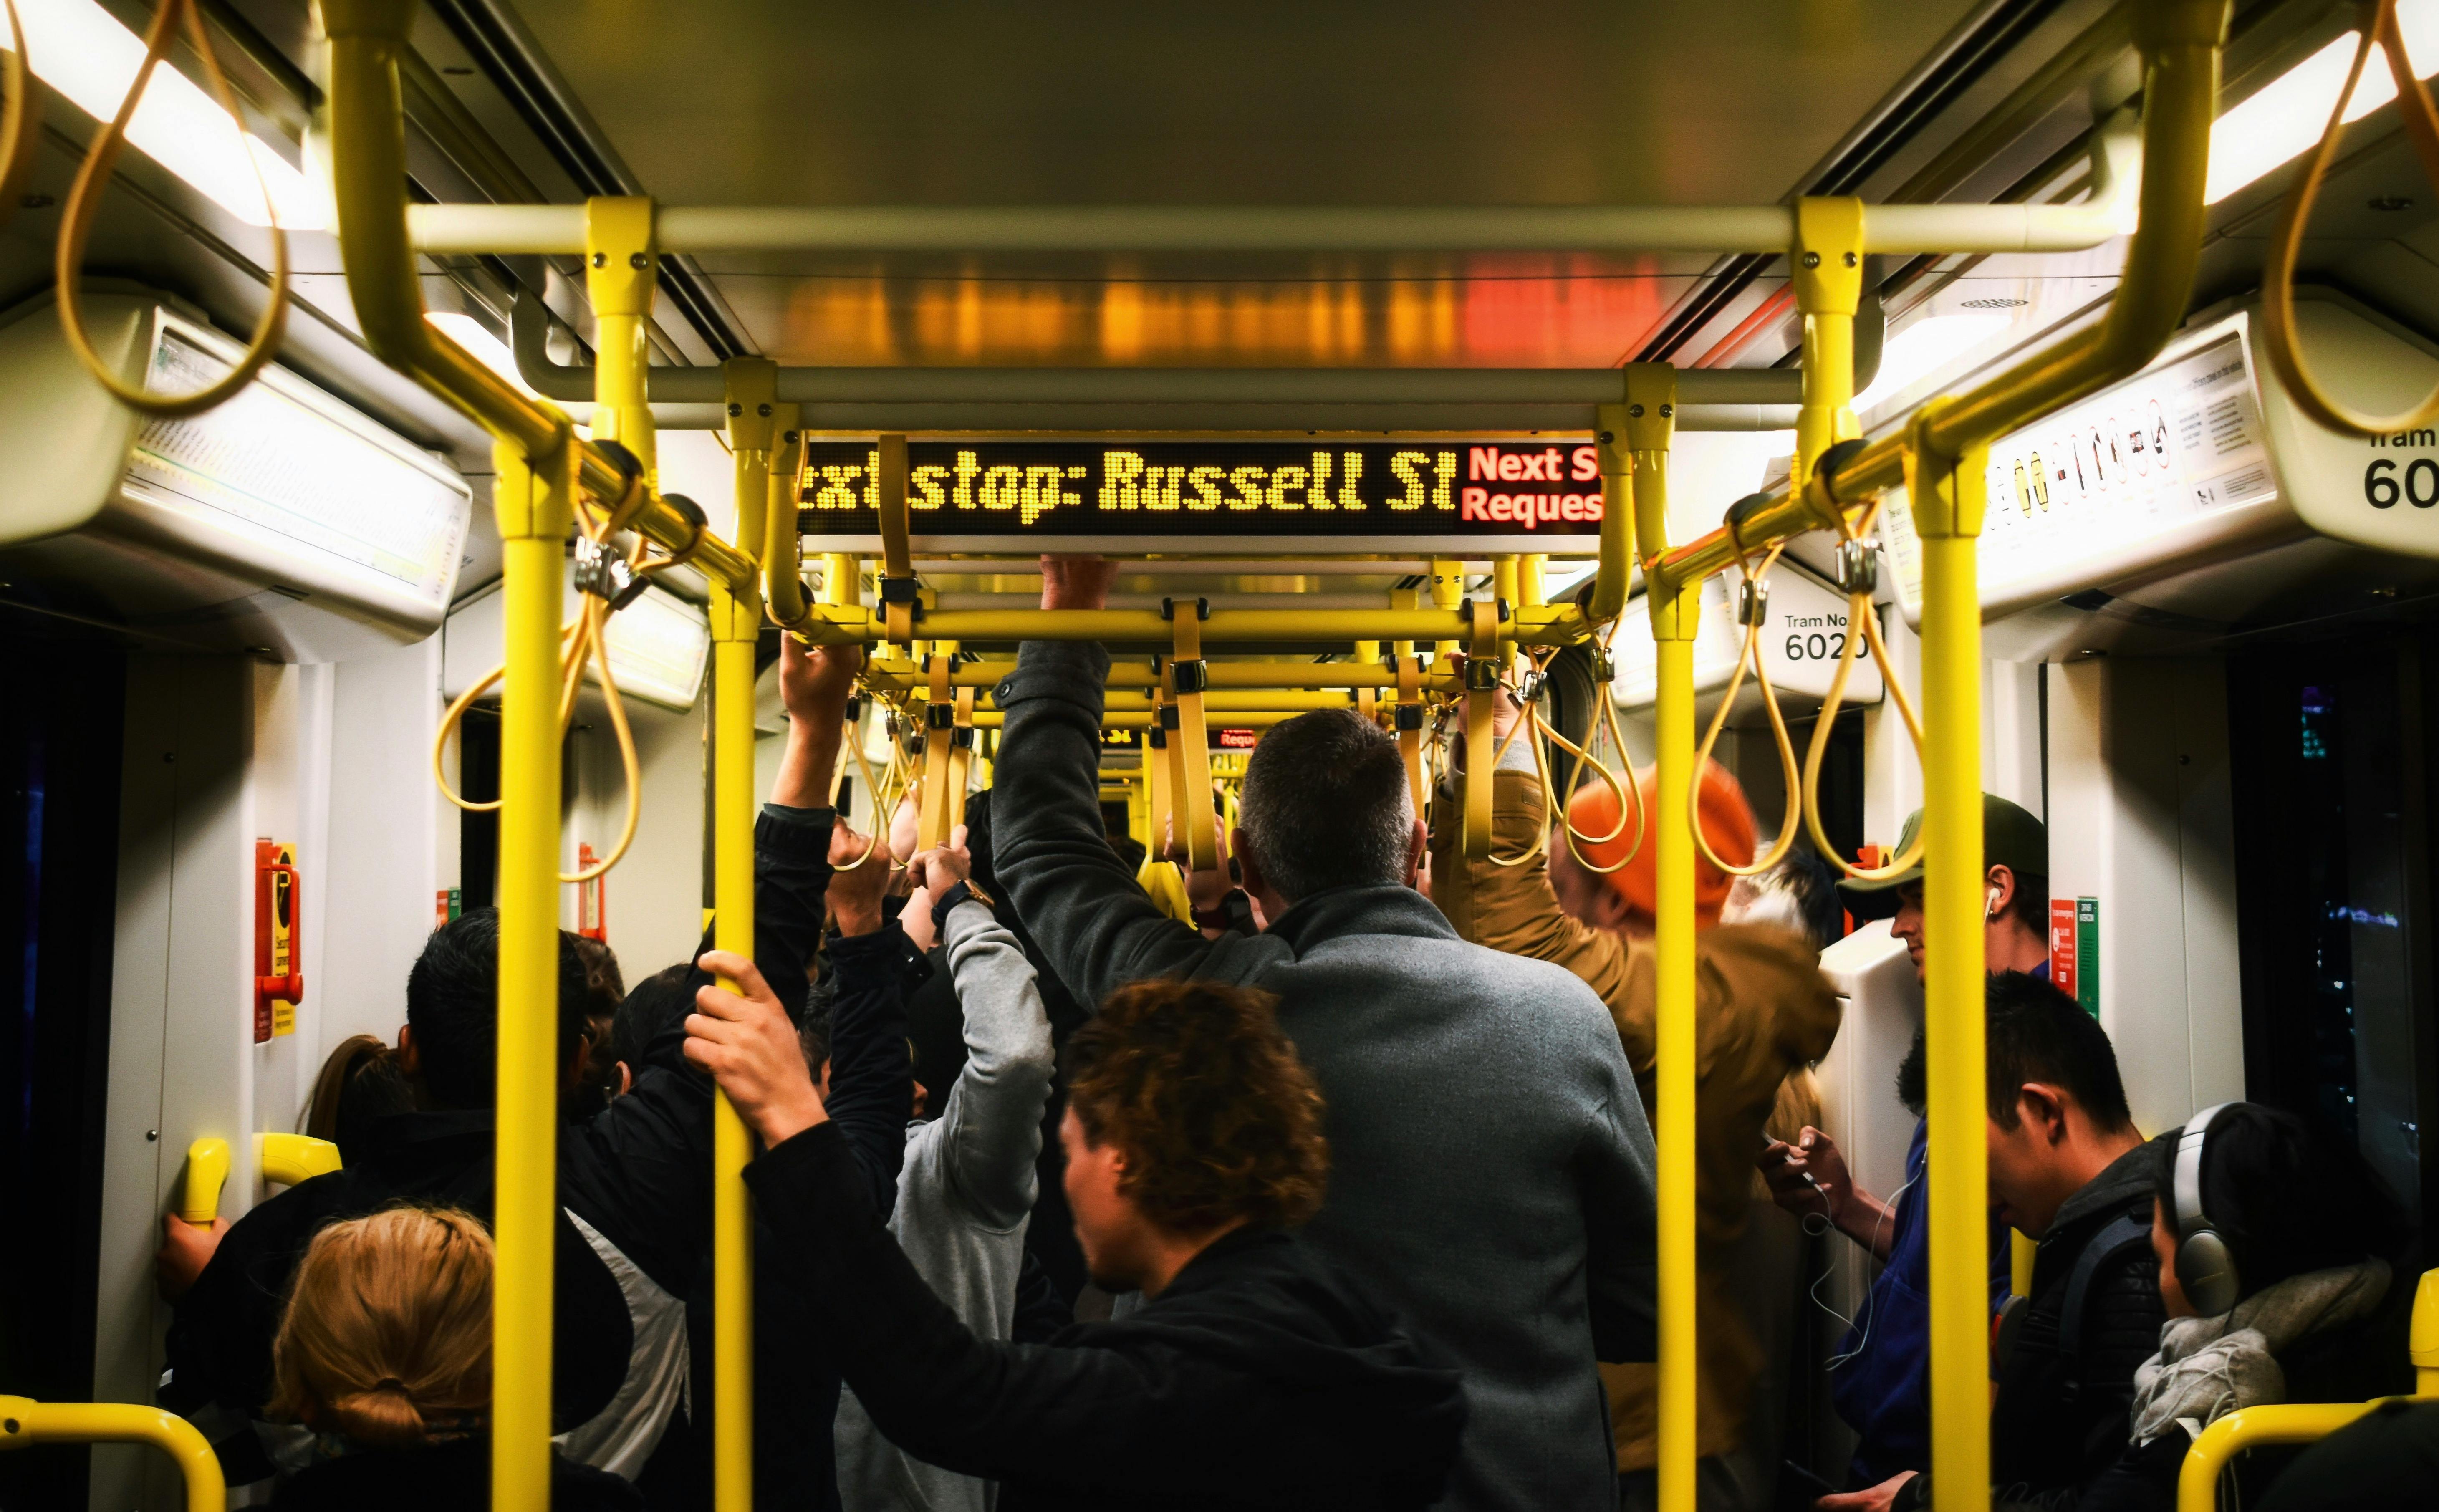 Crowded bus | Source: Pexels